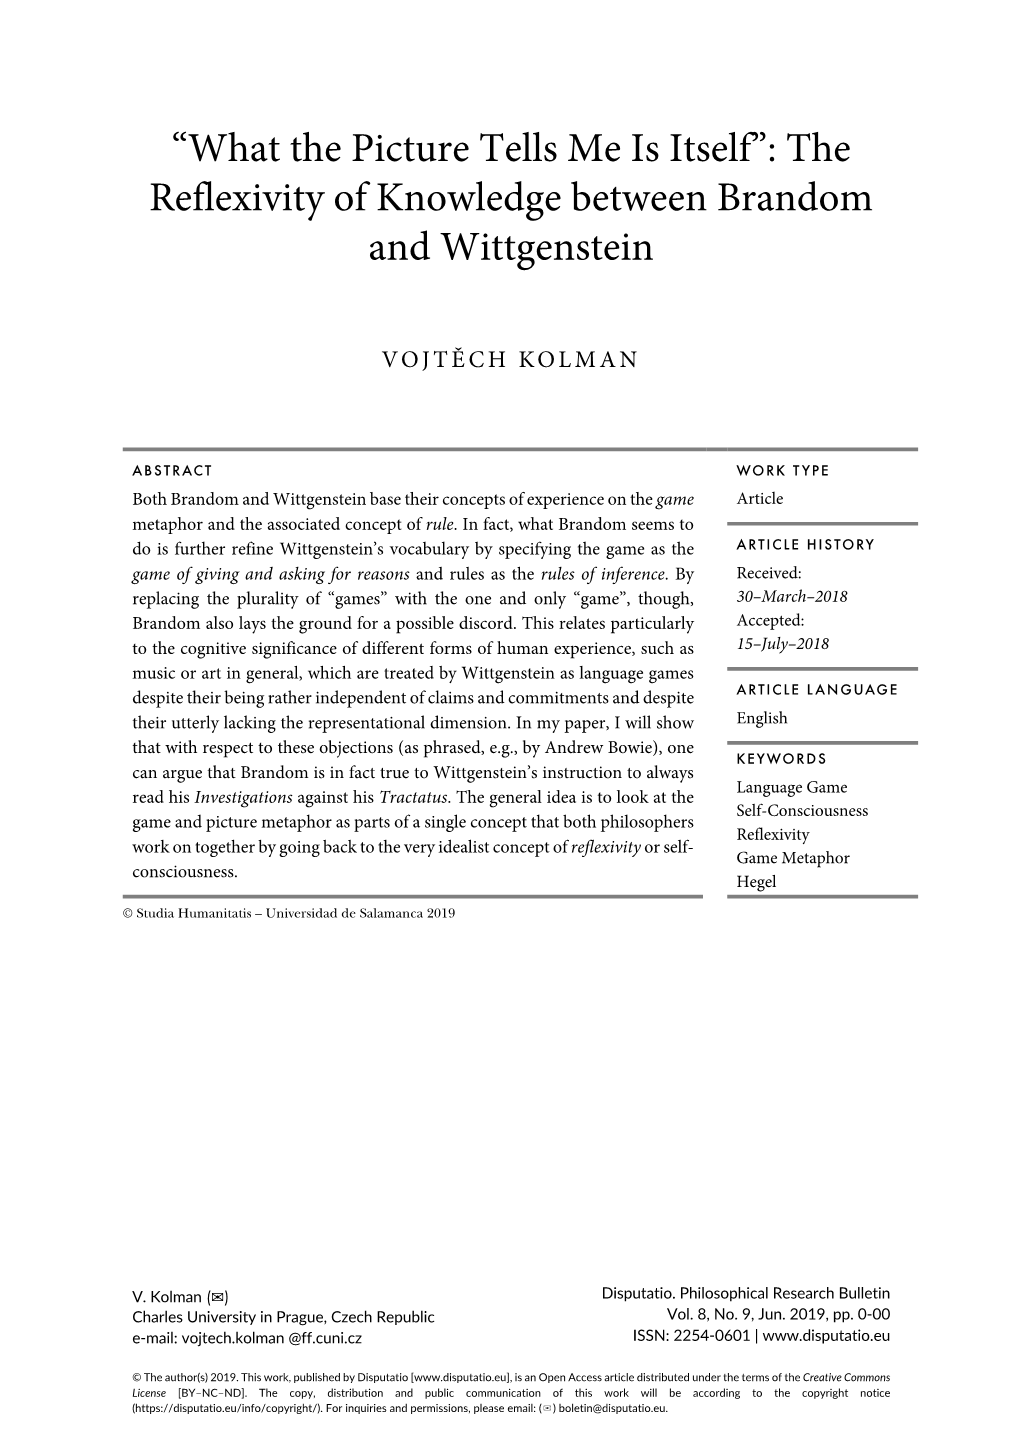 The Reflexivity of Knowledge Between Brandom and Wittgenstein